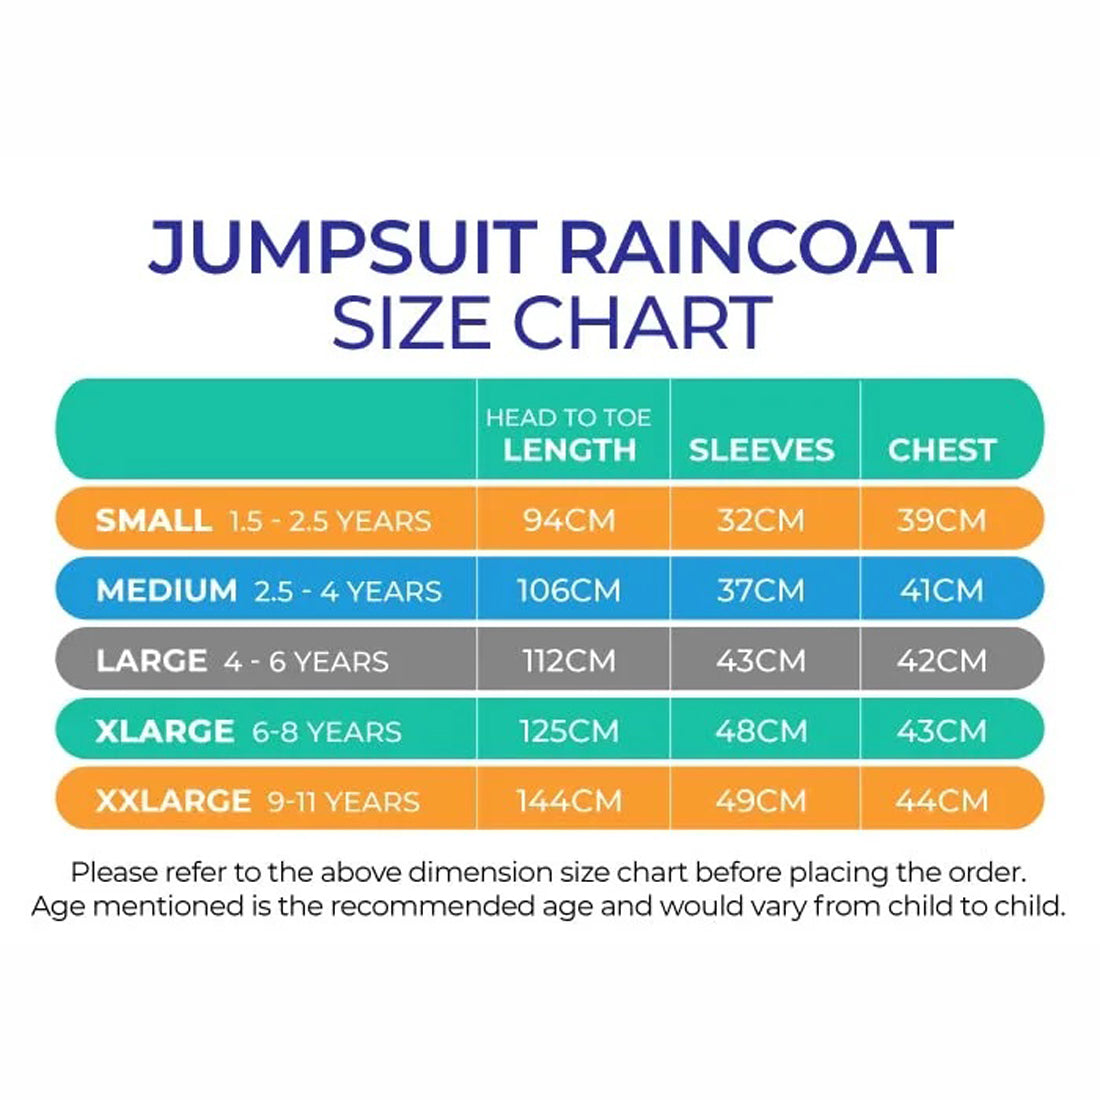 Little Surprise Box All Over Jumpsuit / Playsuit Raincoat for Kids - Bright Orange Roaring Tiger Theme